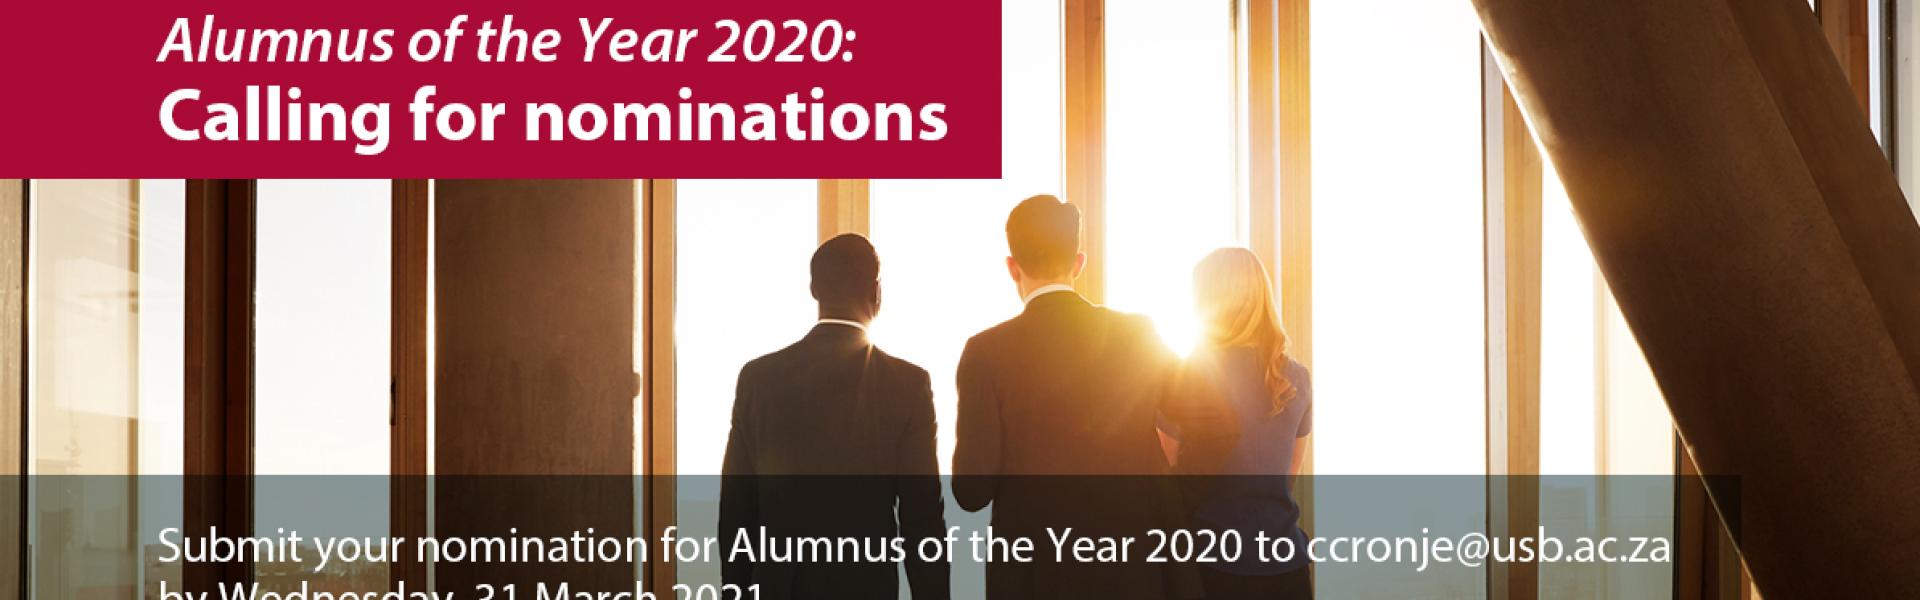 7737_Alumni-of-the-year-flyer_Option